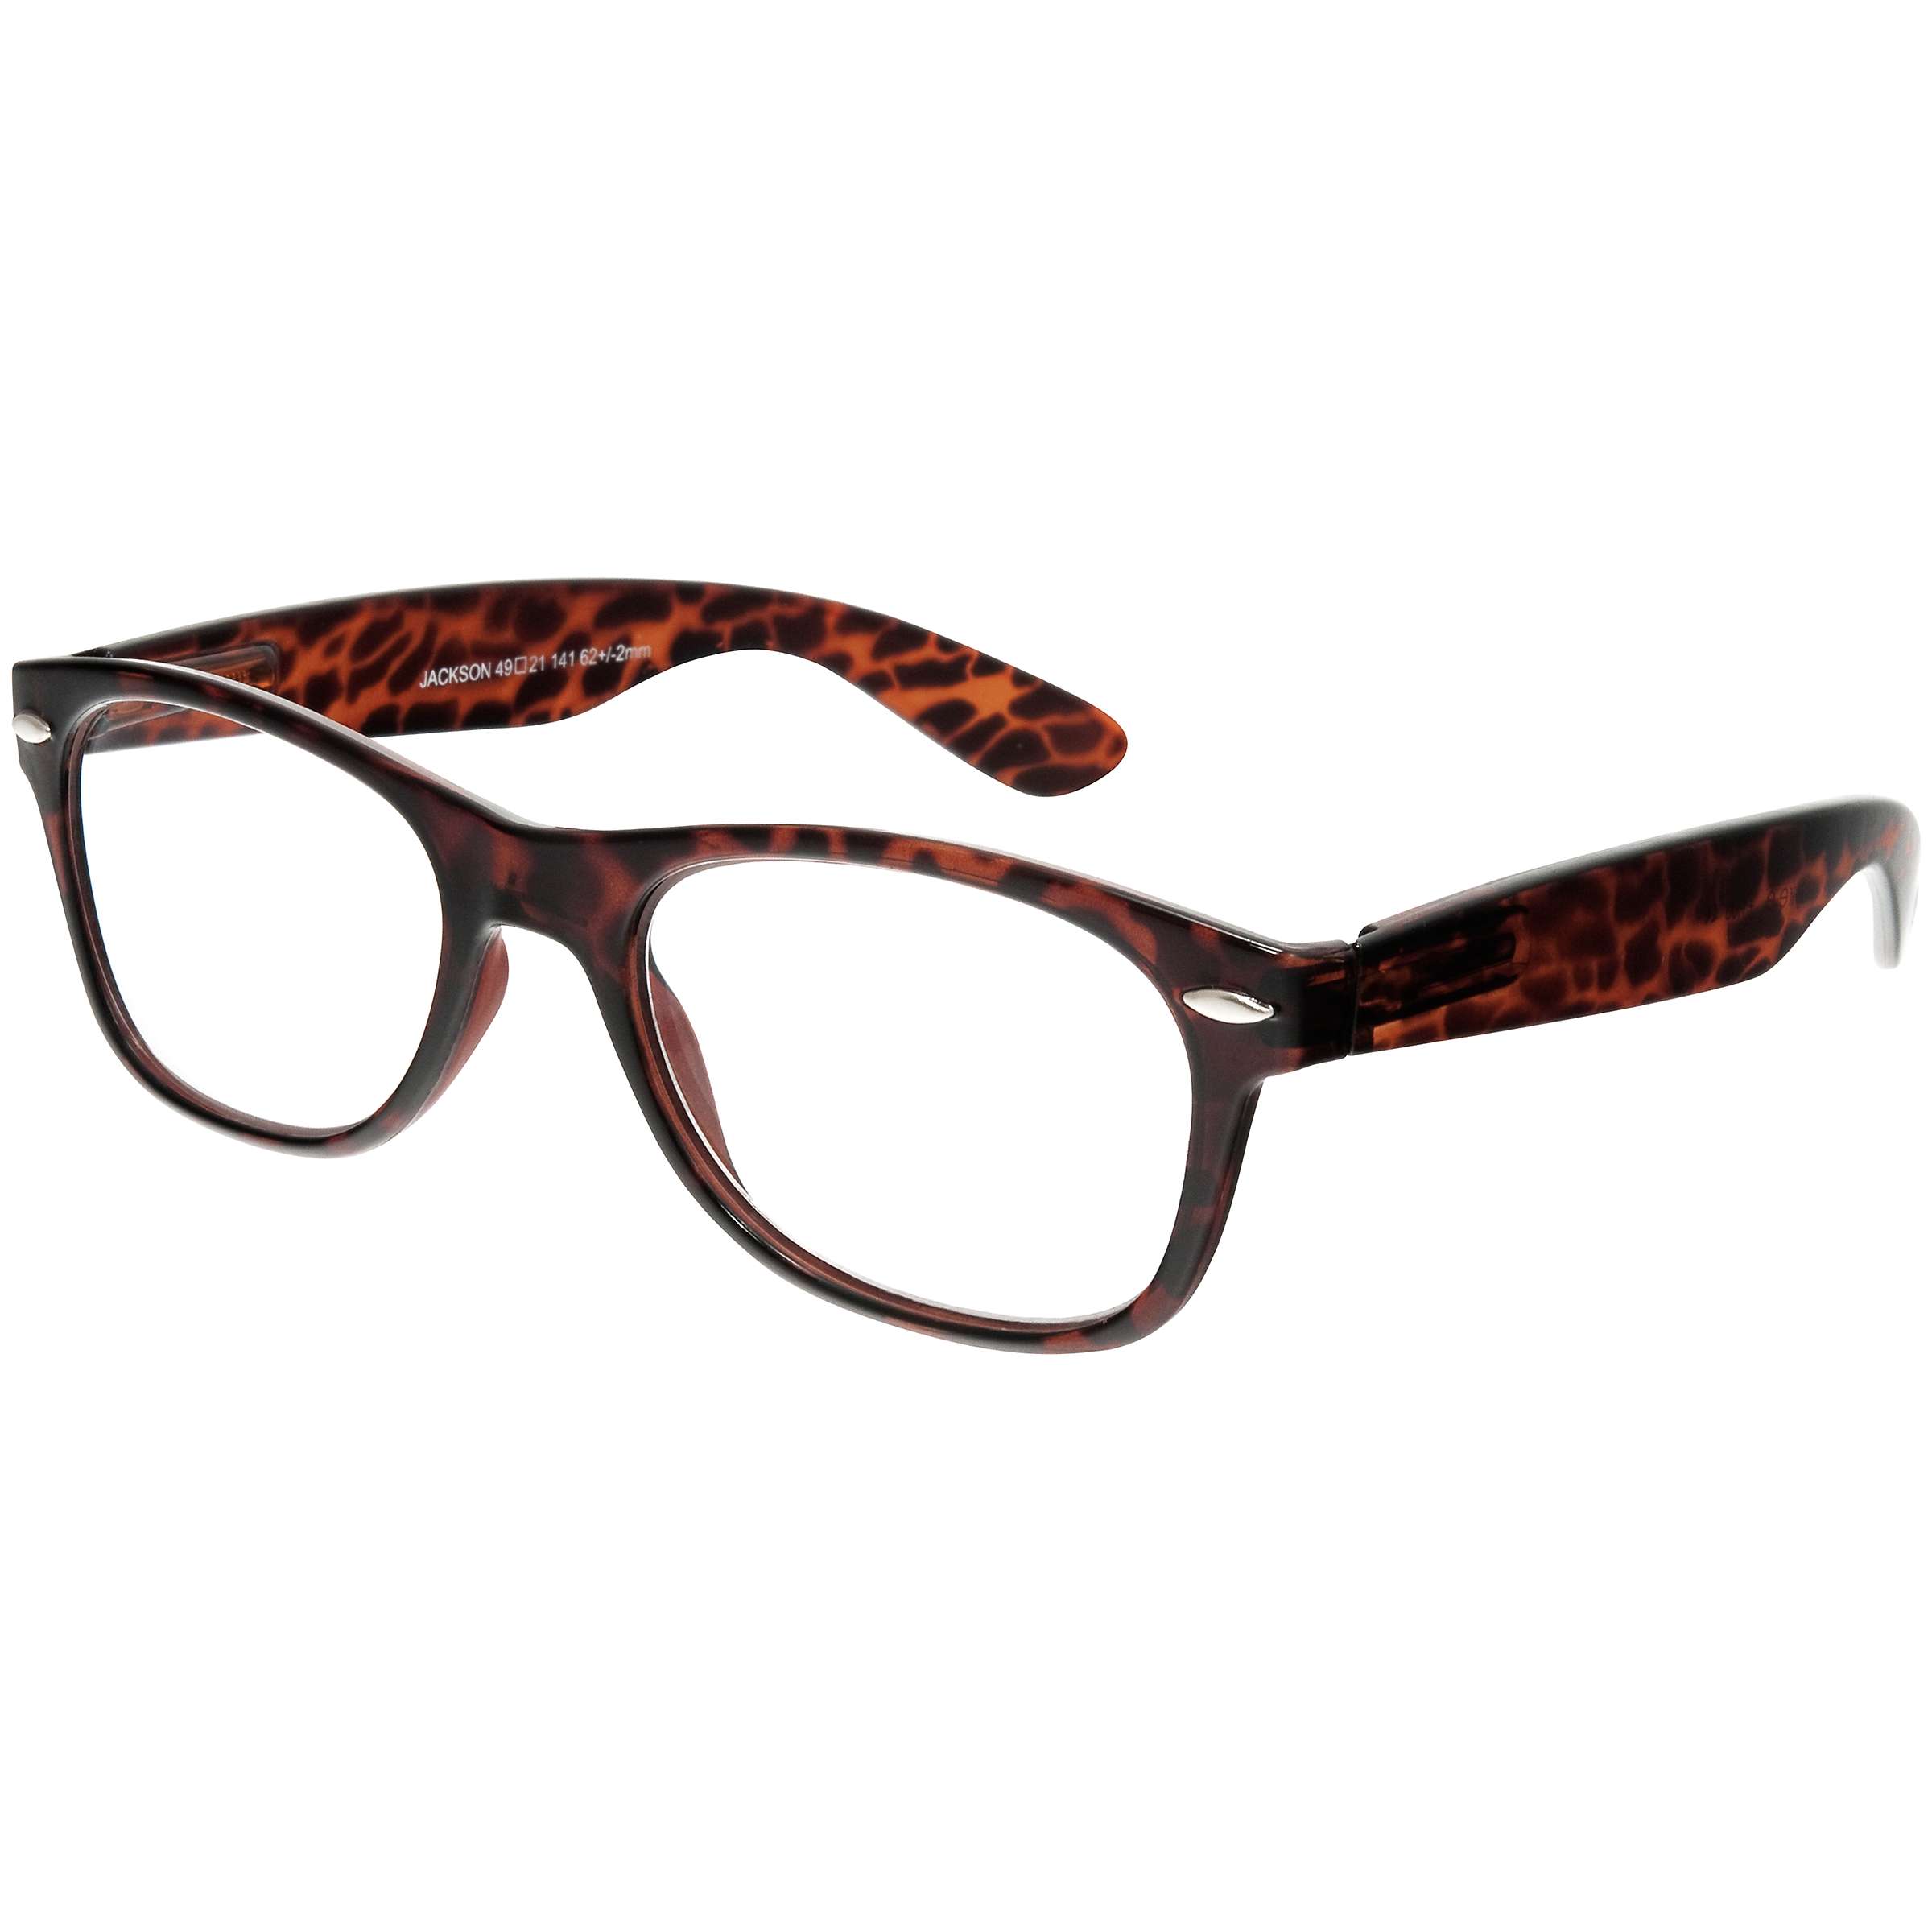 Buy Magnif Eyes Narrow Fit Ready Readers Jackson Glasses, Tortoise Online at johnlewis.com